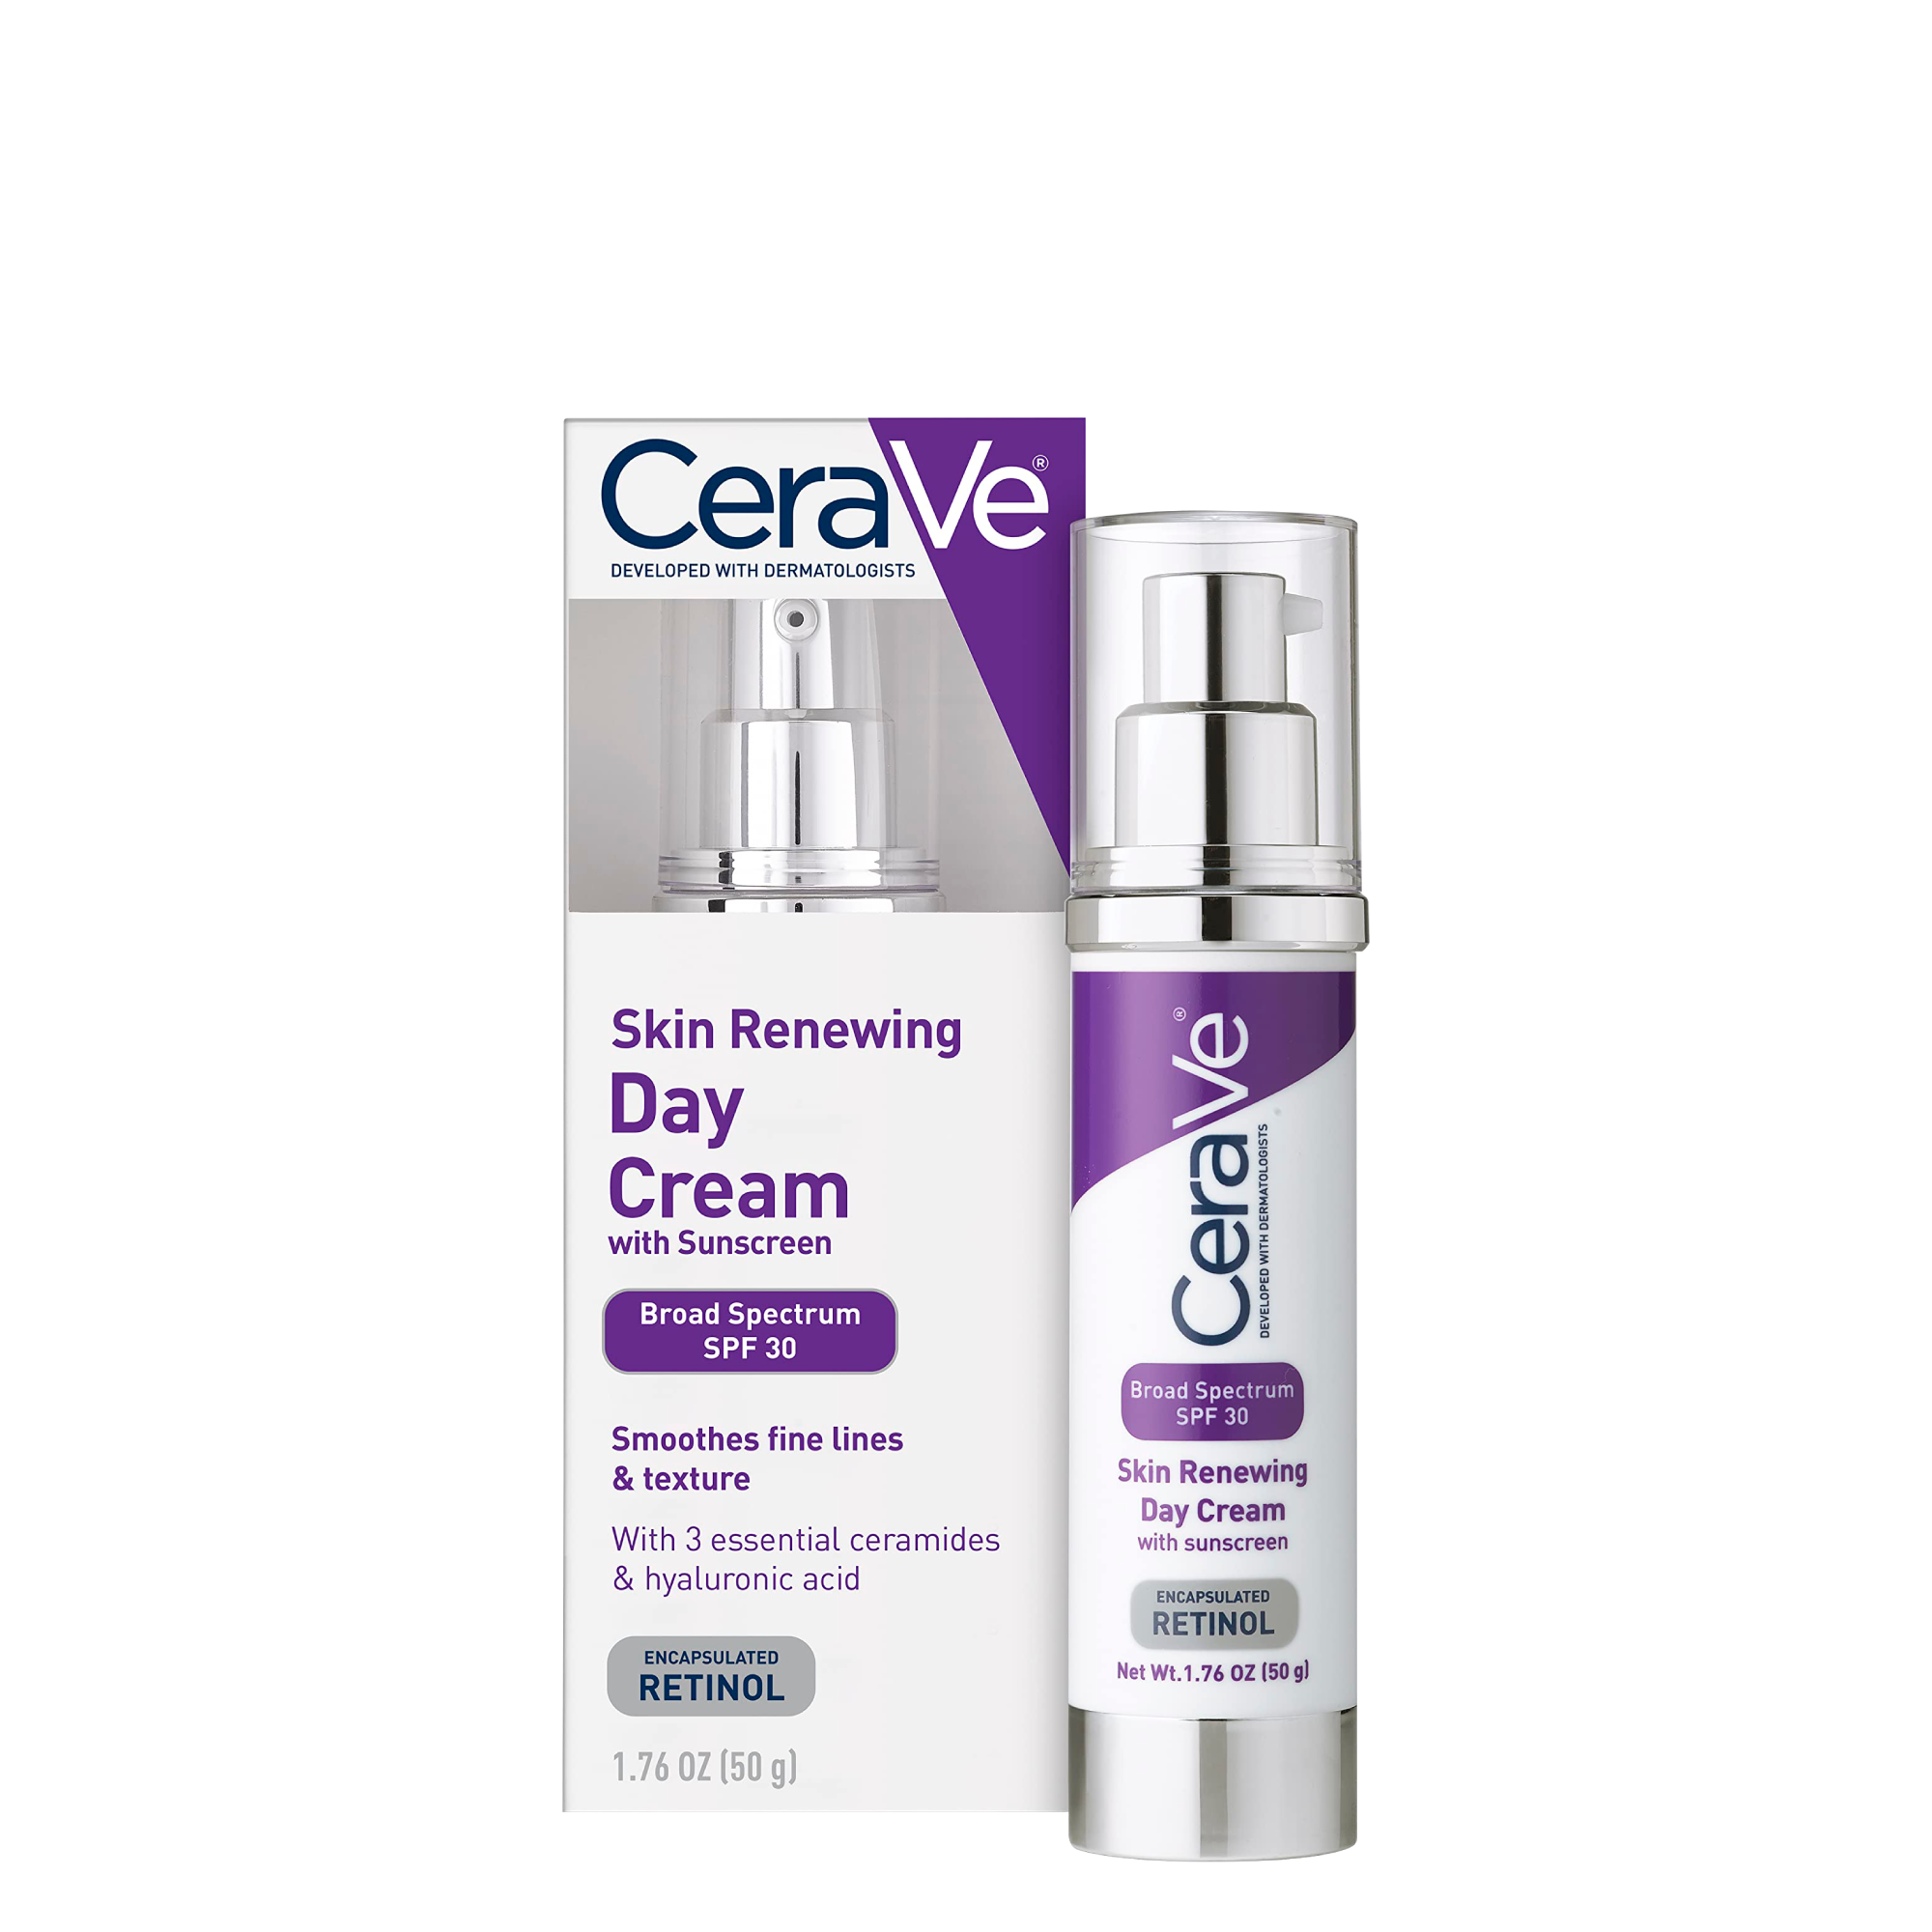 Cerave Skin Renewing Day Cream 50g Cerave